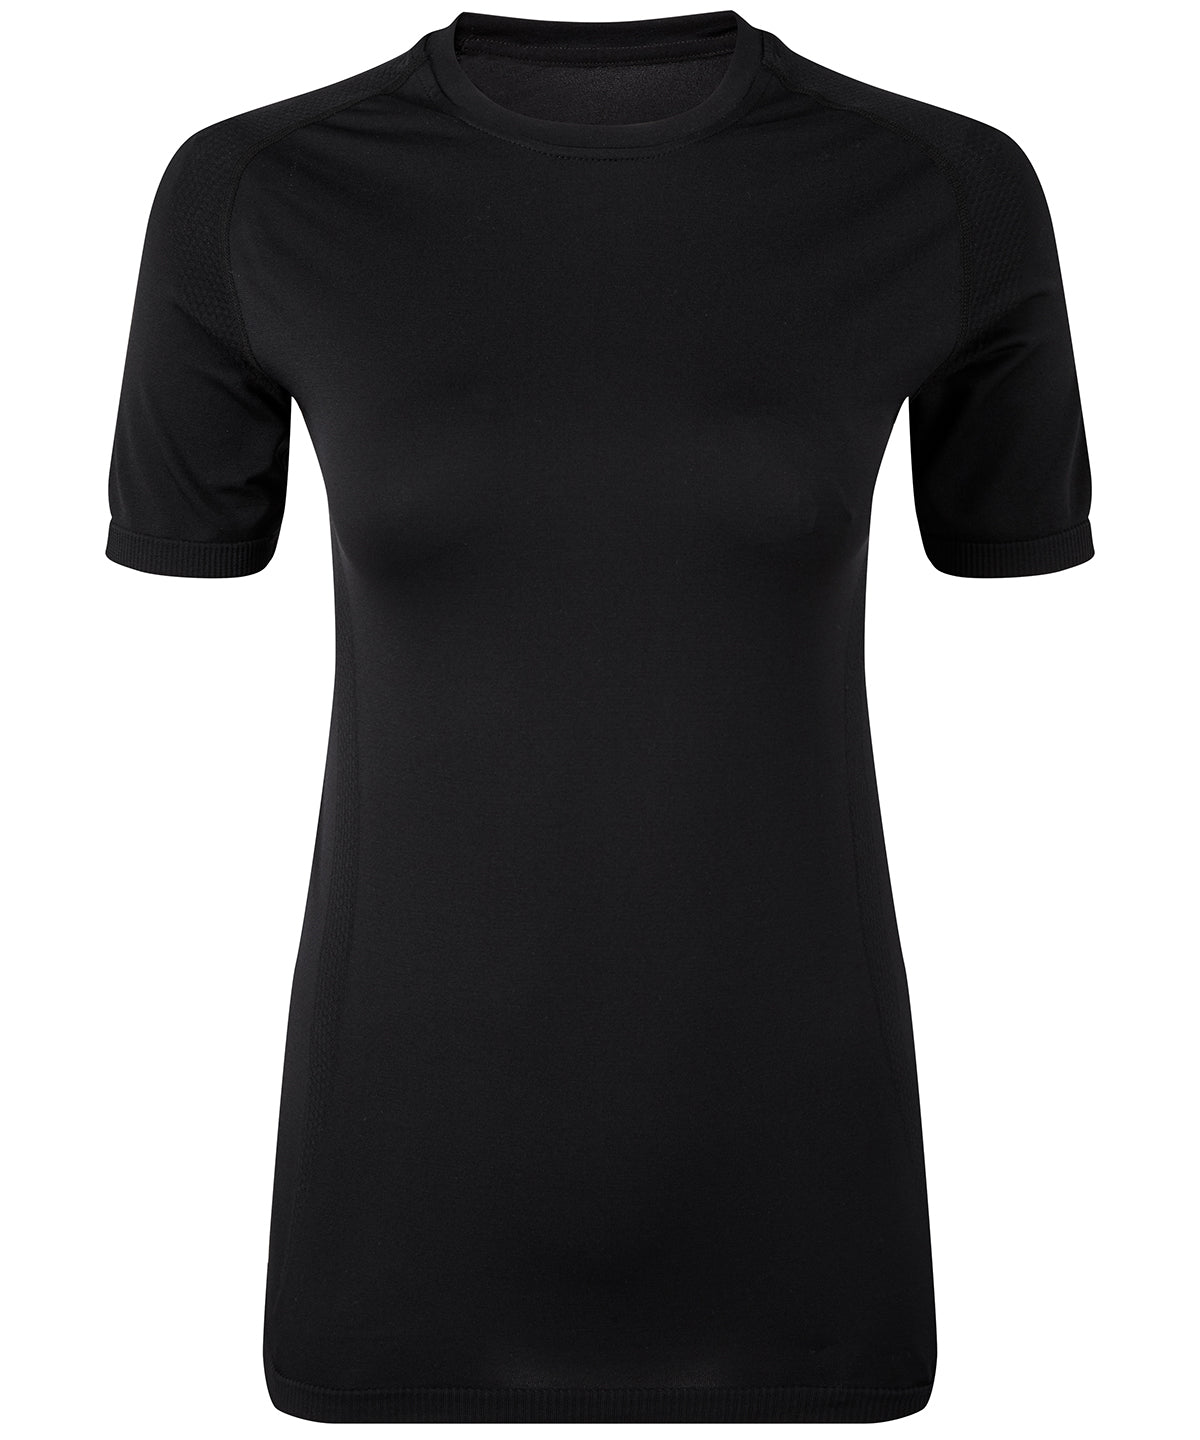 Stuttermabolir - Women's TriDri® Seamless '3D Fit' Multi-sport Performance Short Sleeve Top